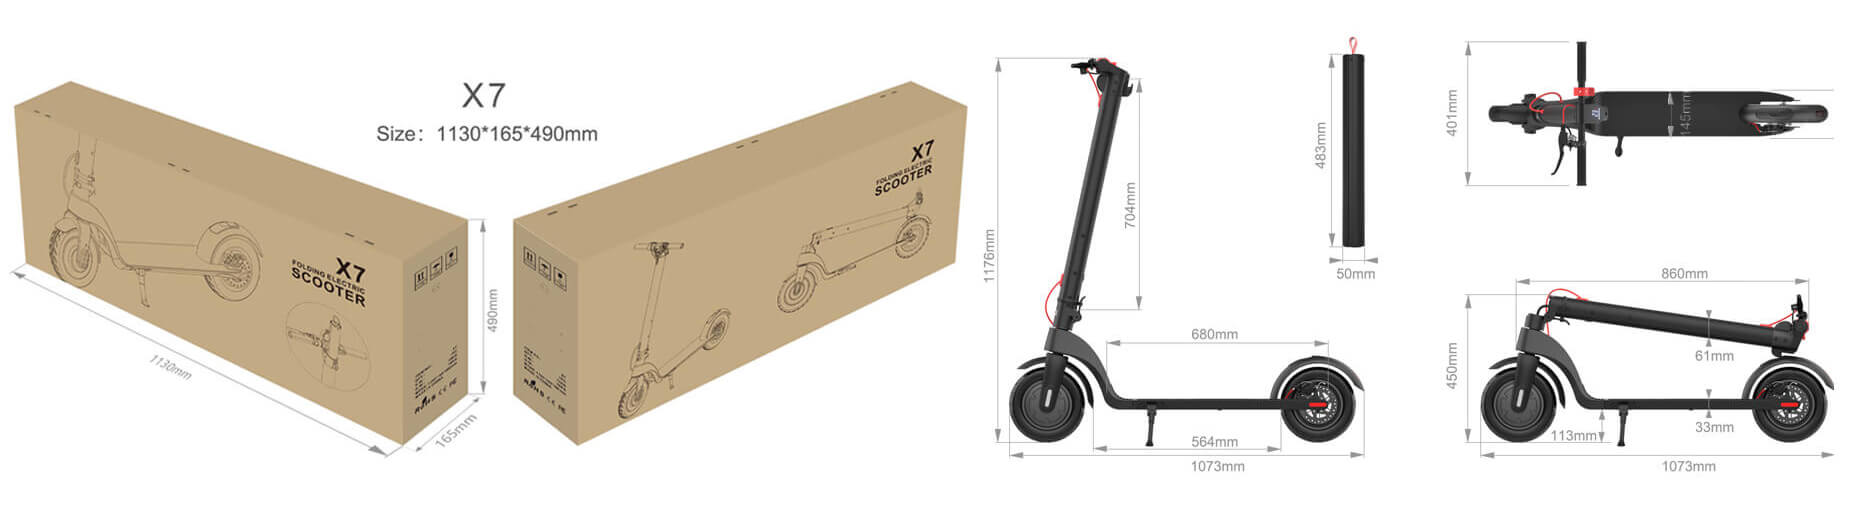 Electric scooter HX X7 black box size